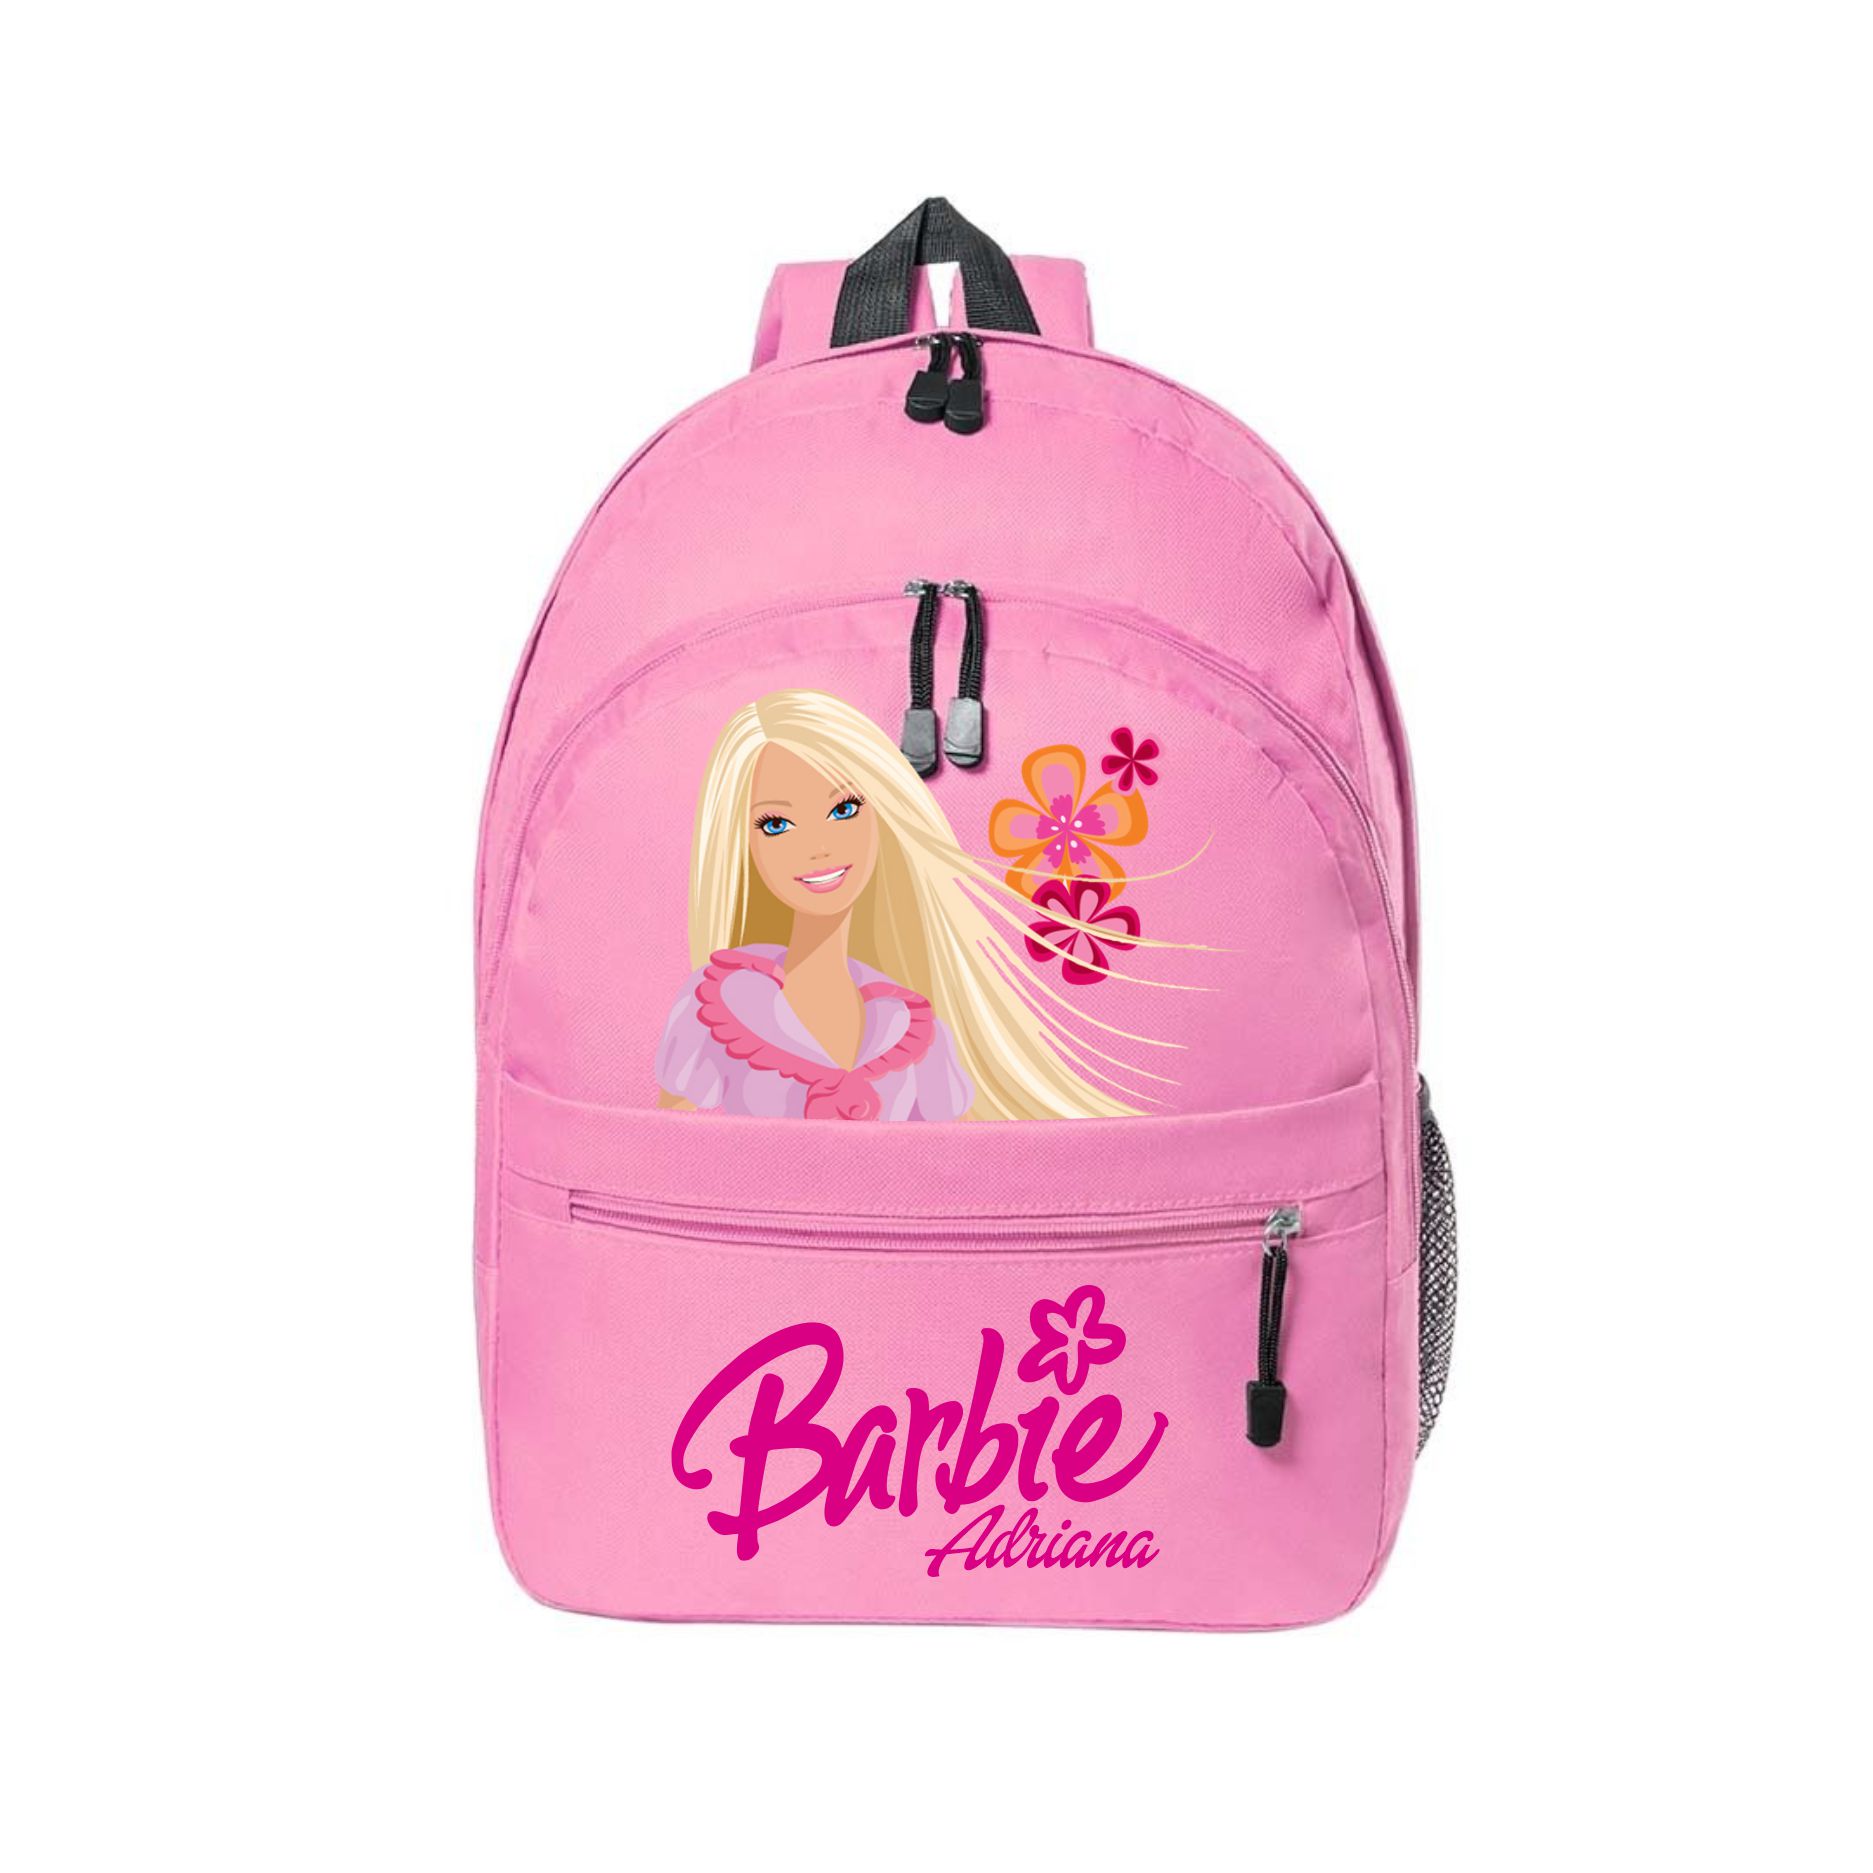 Estores Iroa  Mochila Barbie infantil, mochila Barbie niña, mochila Barbie  escolar, mochila Barbie